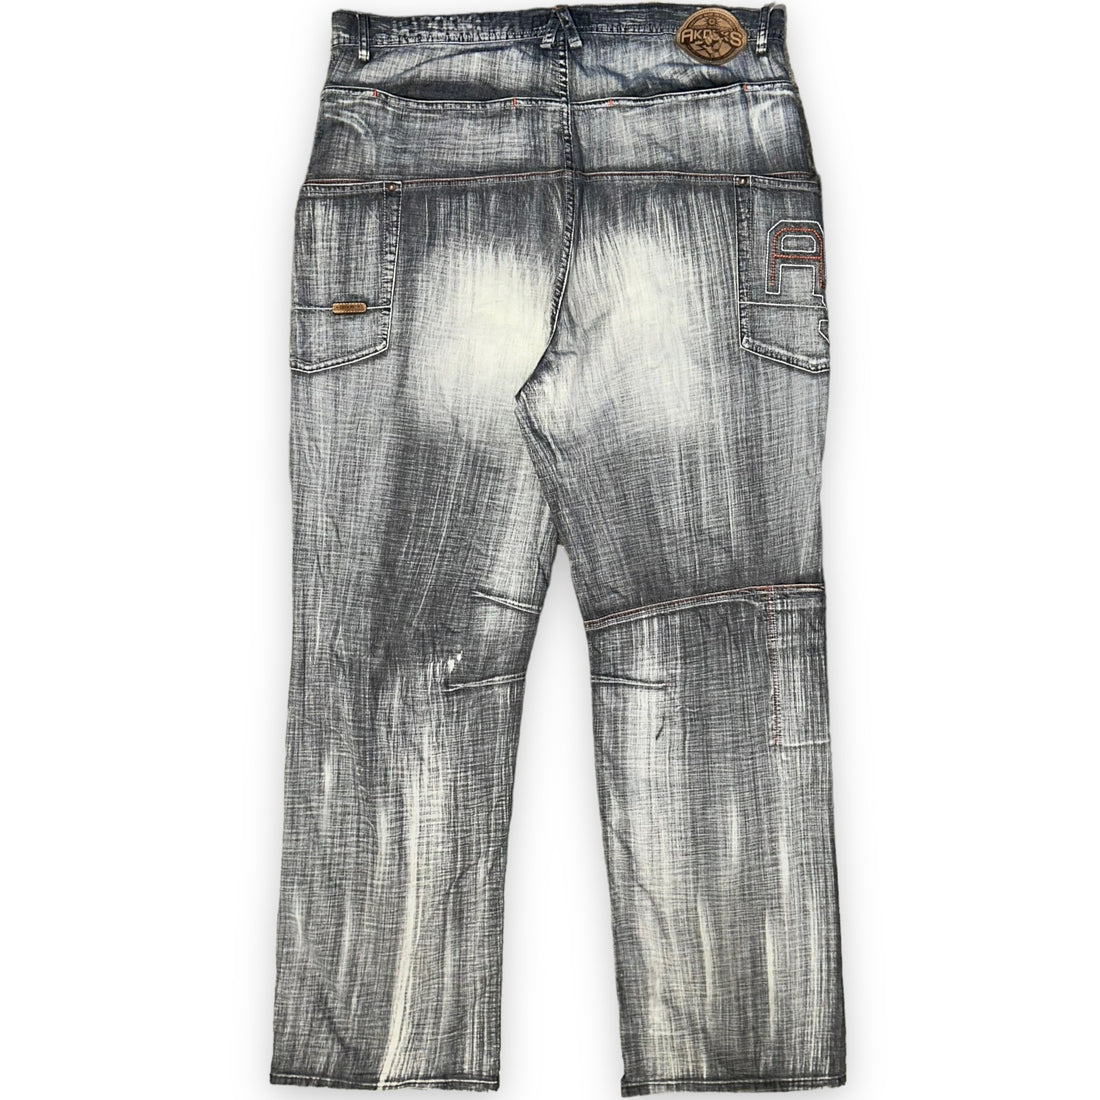 Baggy jeans Akademiks (42 USA XXXL) - oldstyleclothing